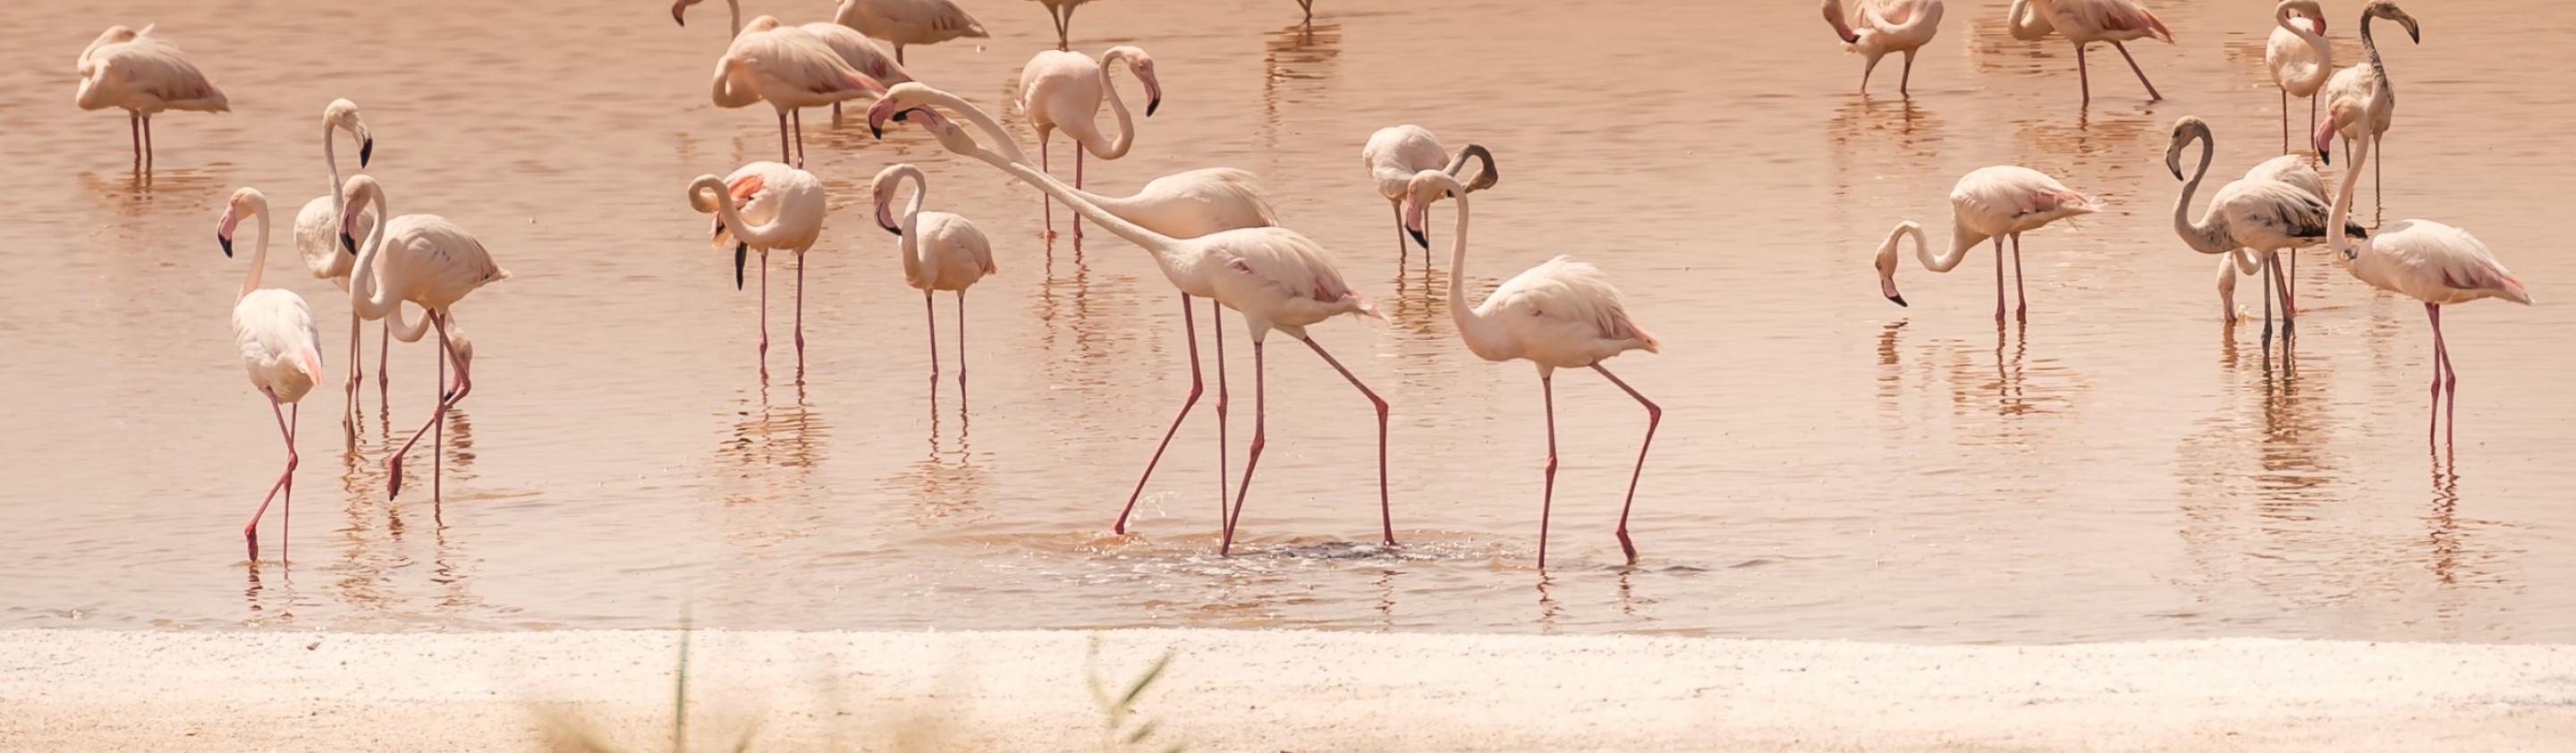 flamingos wildlife al wathba wetland reserve ramsar